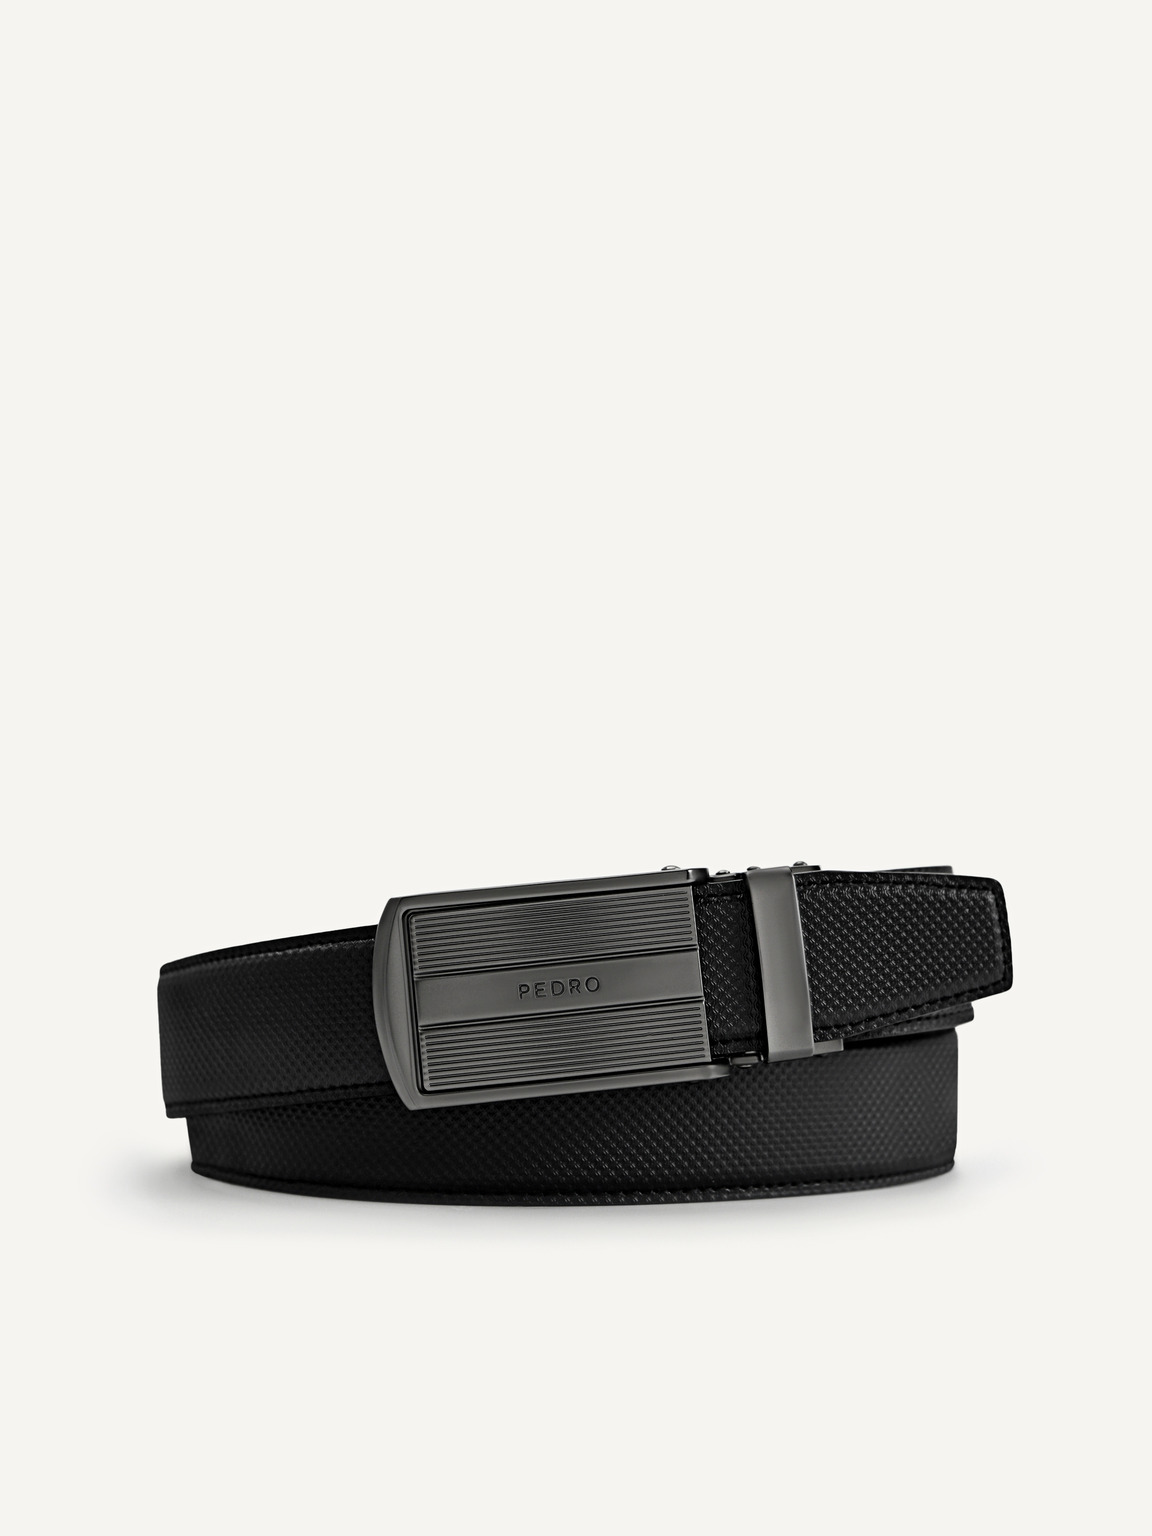 Textured Leather Belt, Black